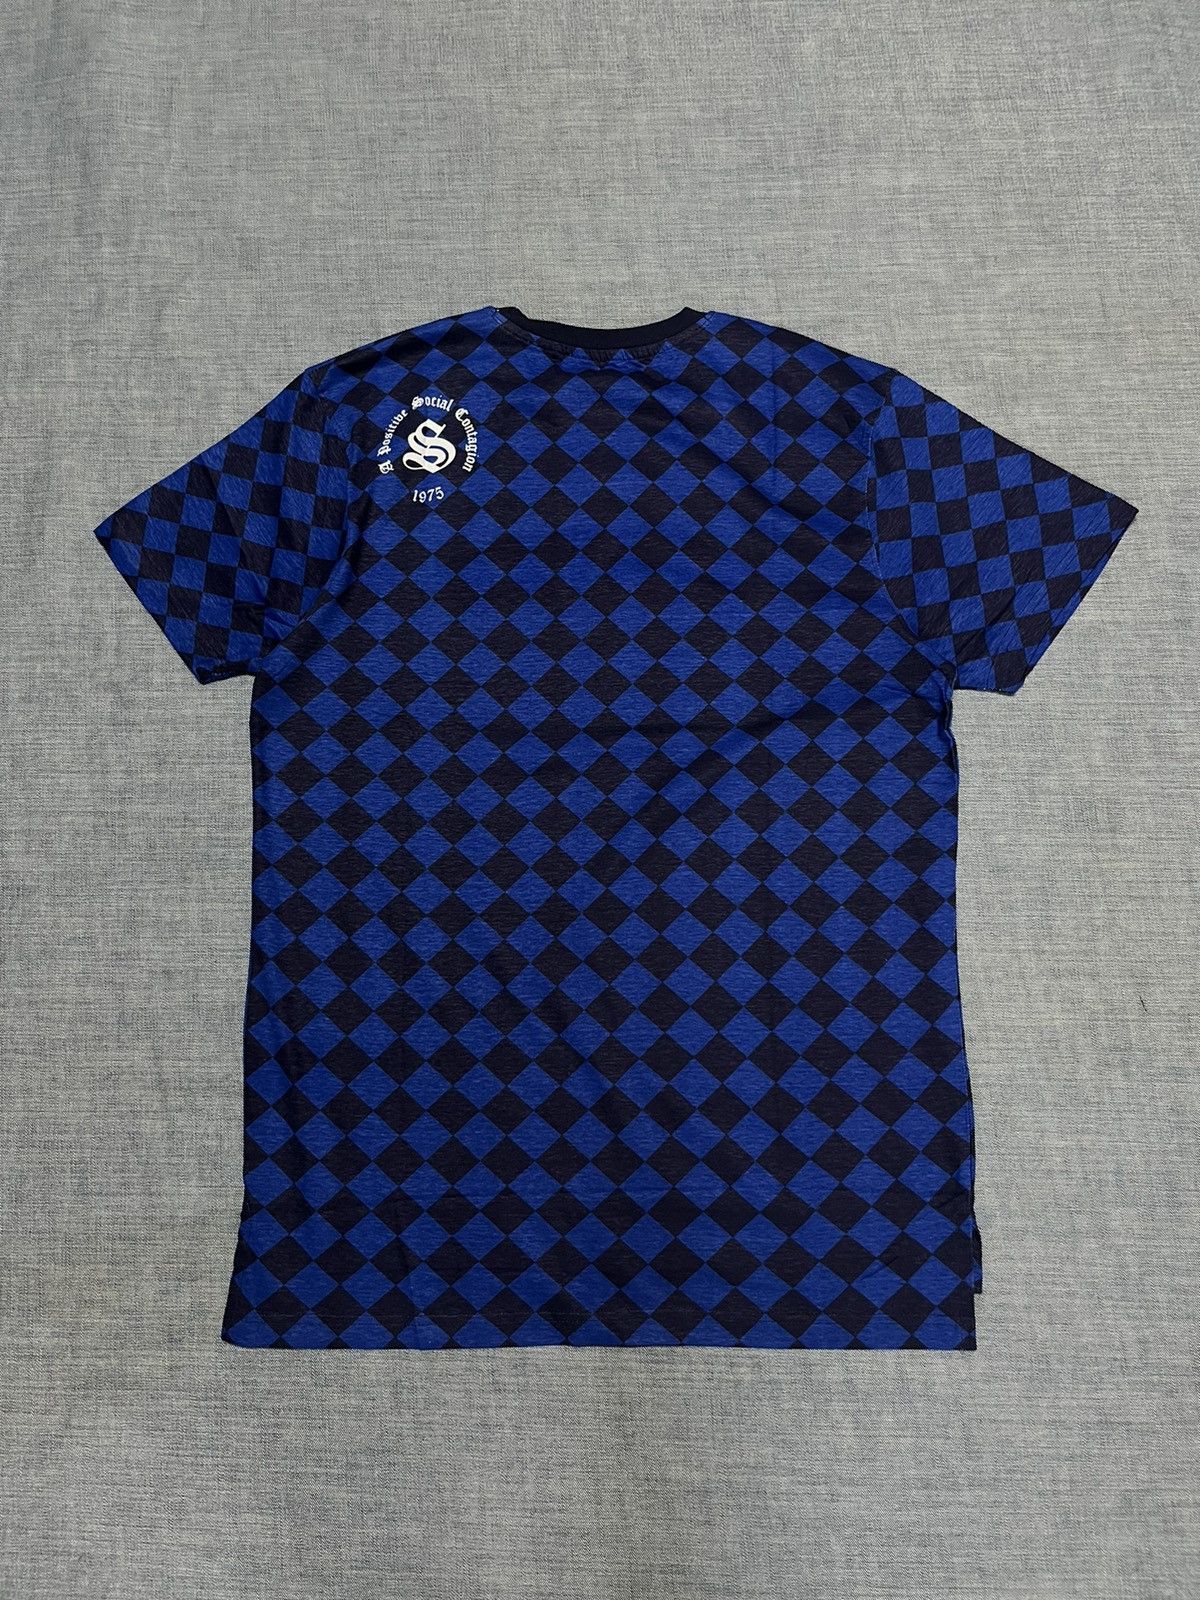 Staple New York Pigeon Blue Checkboard T-Shirt Large - 8